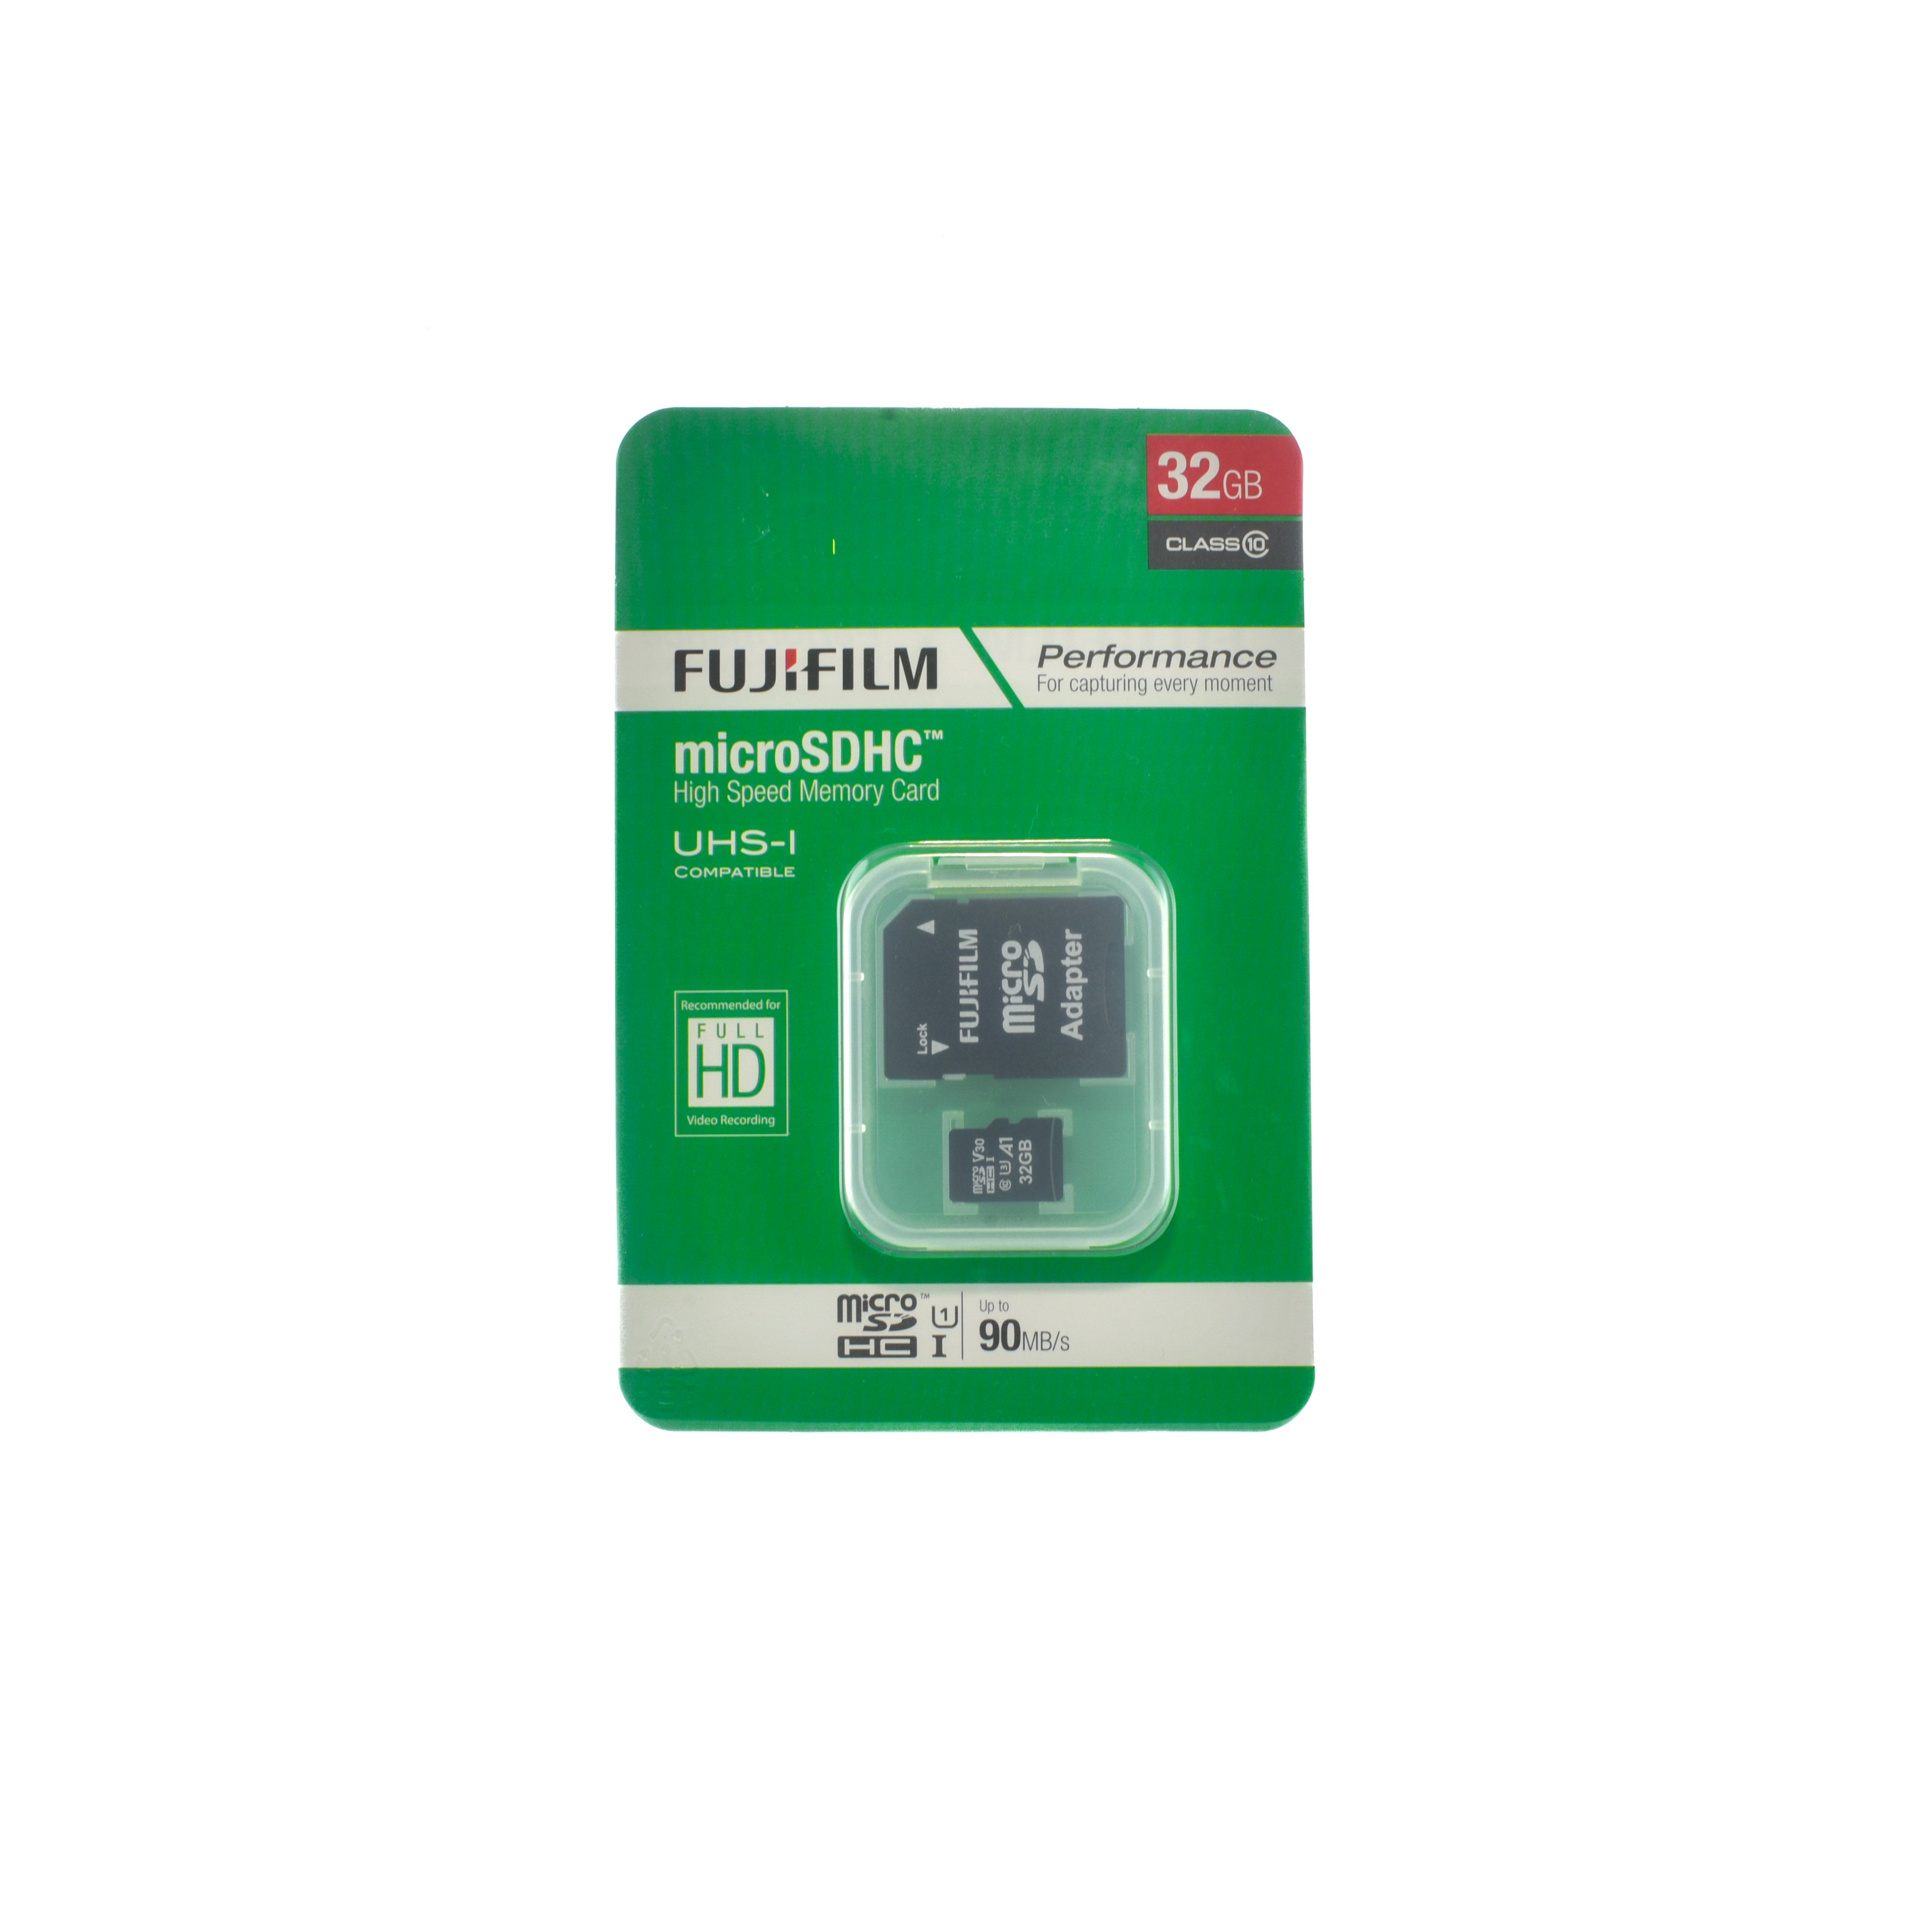 Fujifilm 32 GB Micro SDHC Card Performance